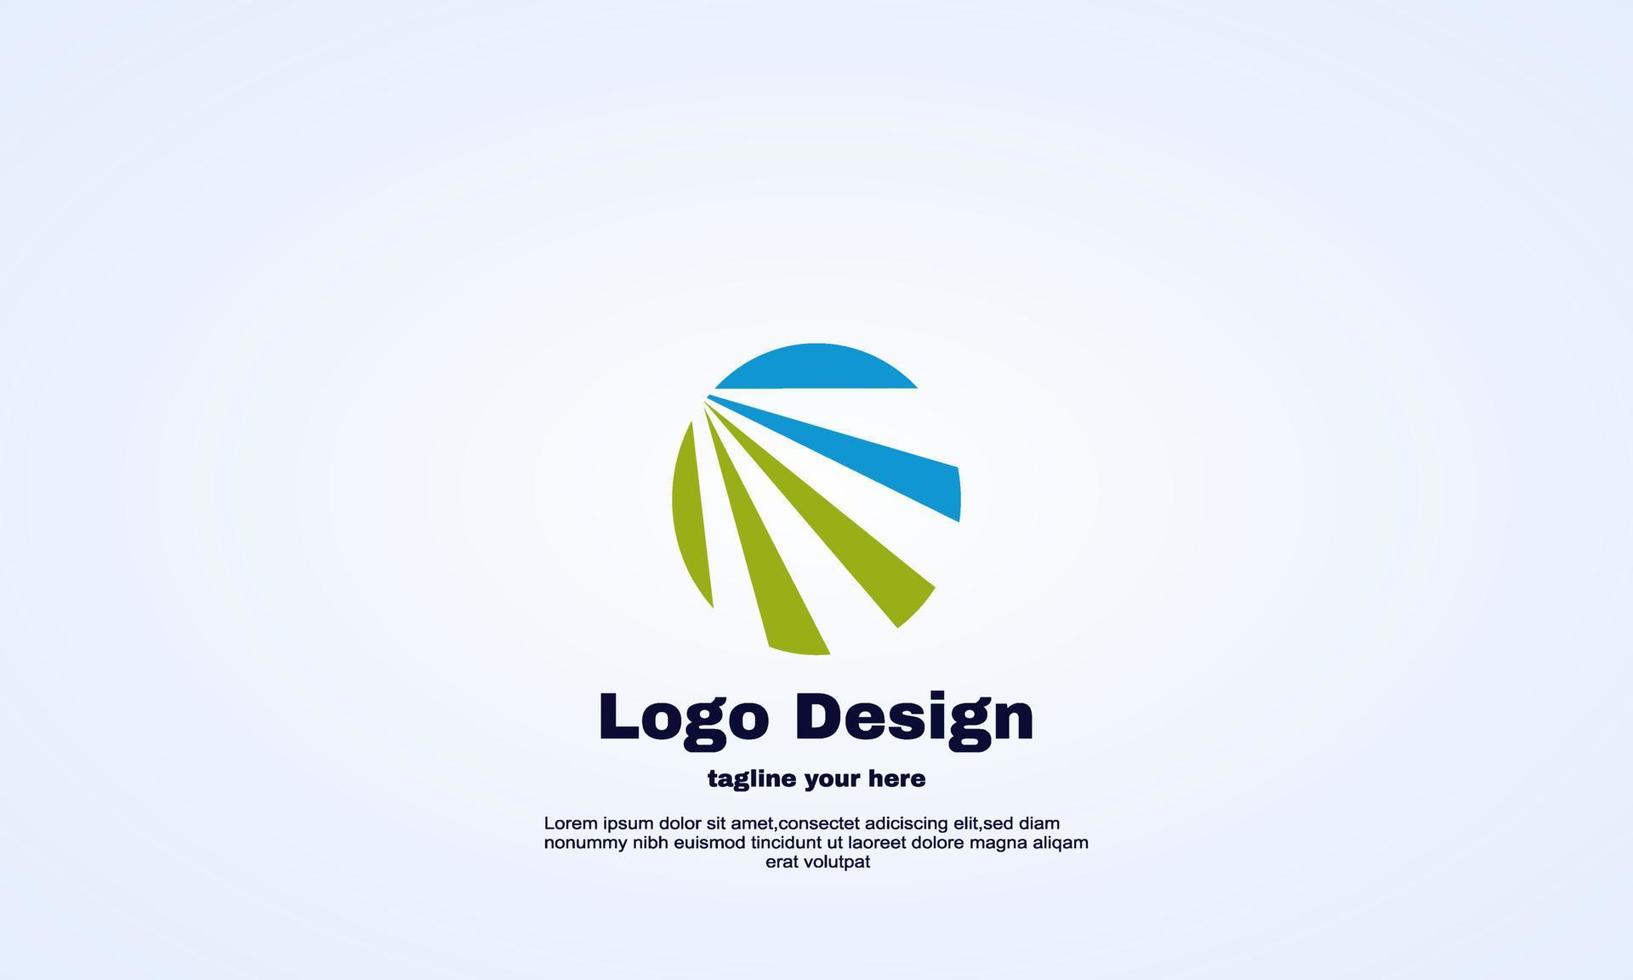 Aktien abstrakter Finanzberater Logo-Design-Vektor vektor